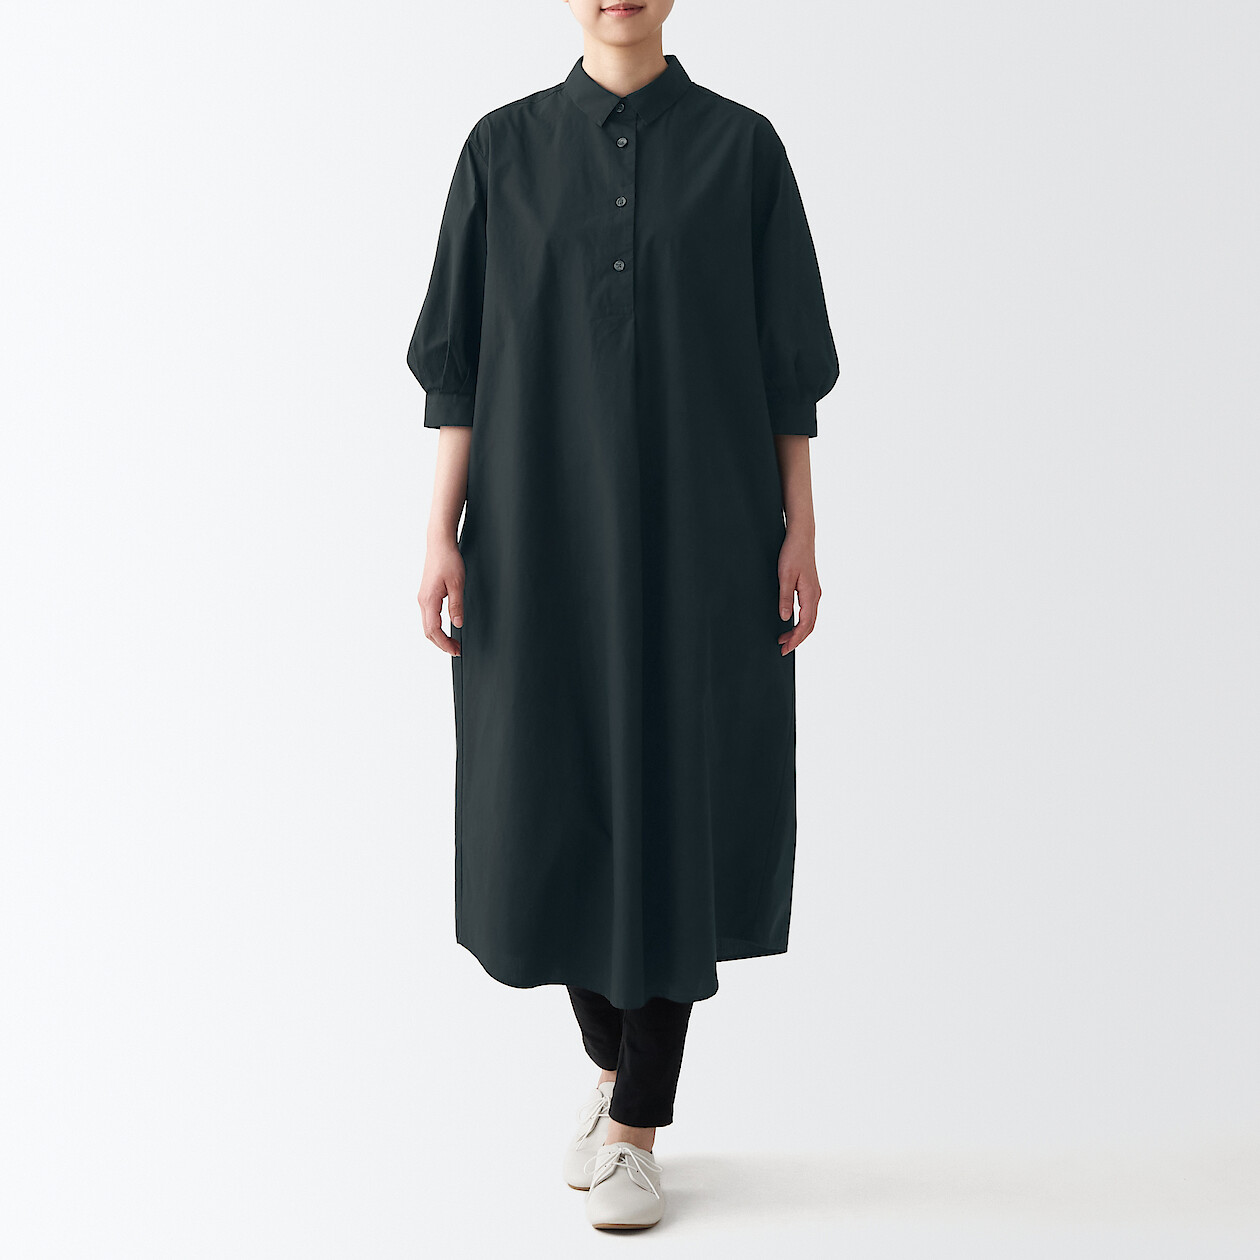 Shop Broad 3/4 Sleeve One-Piece Dress online | Muji Kuwait